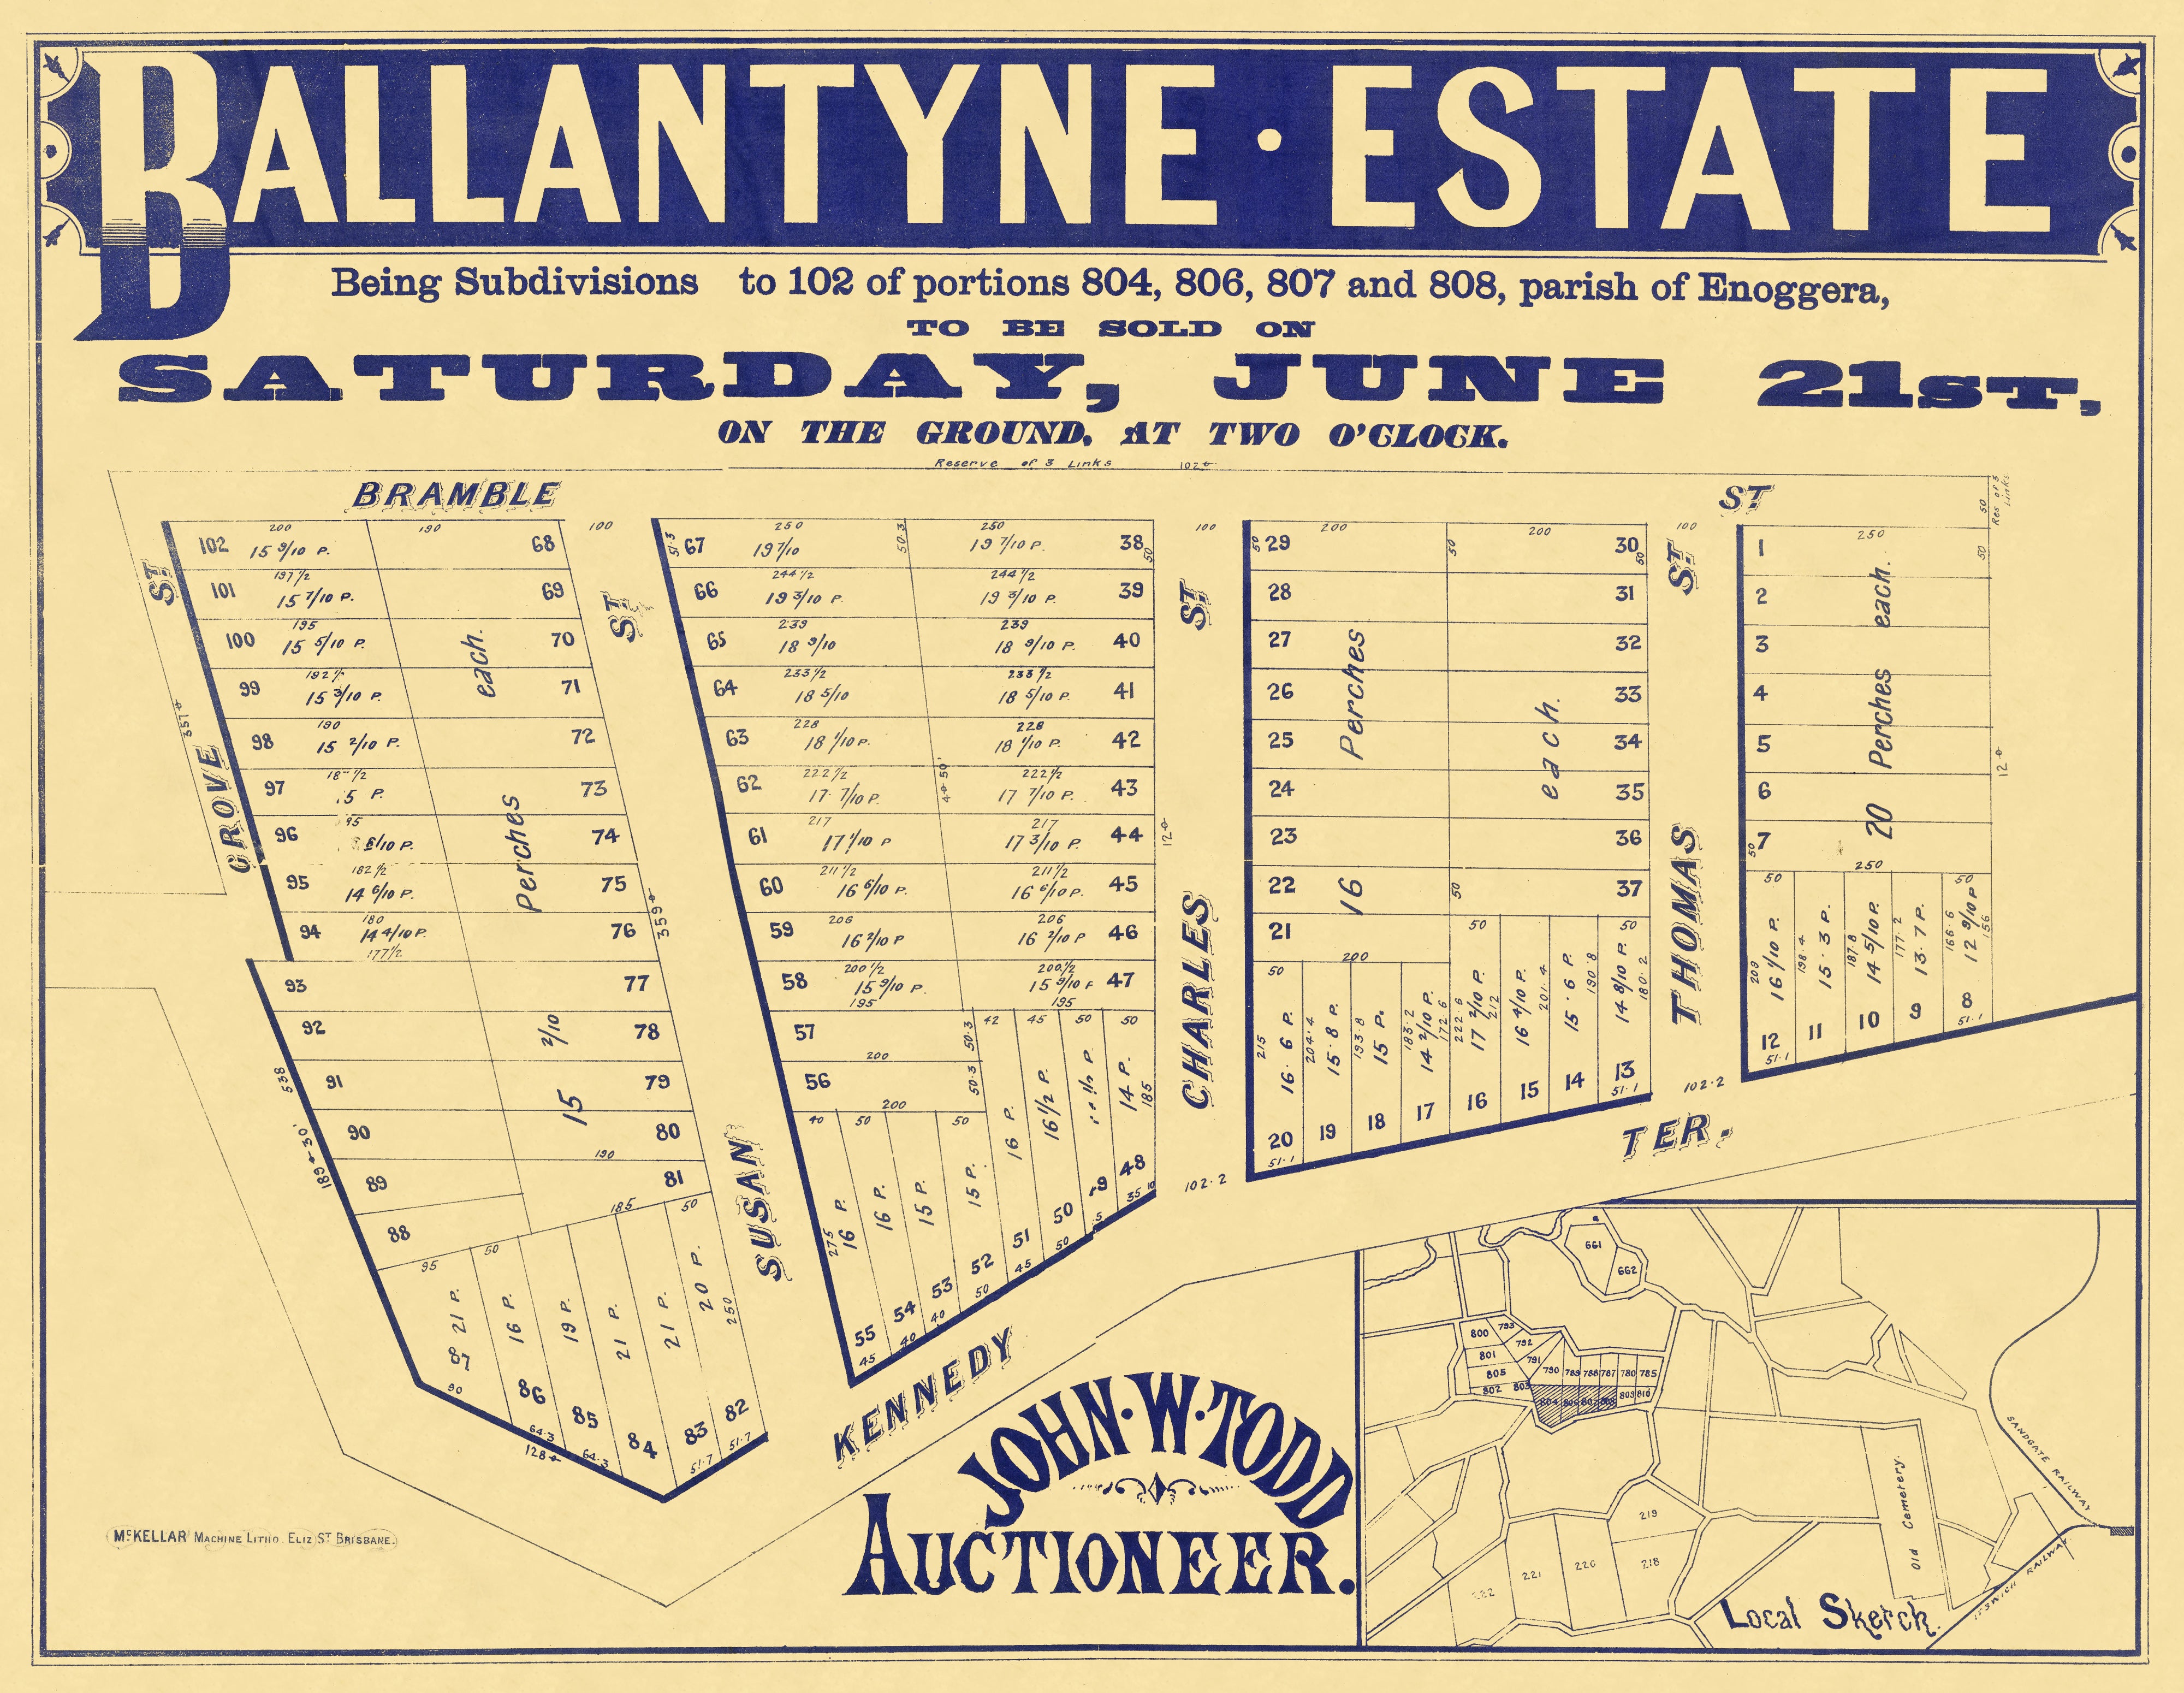 1884 Red Hill - Ballantyne Estate